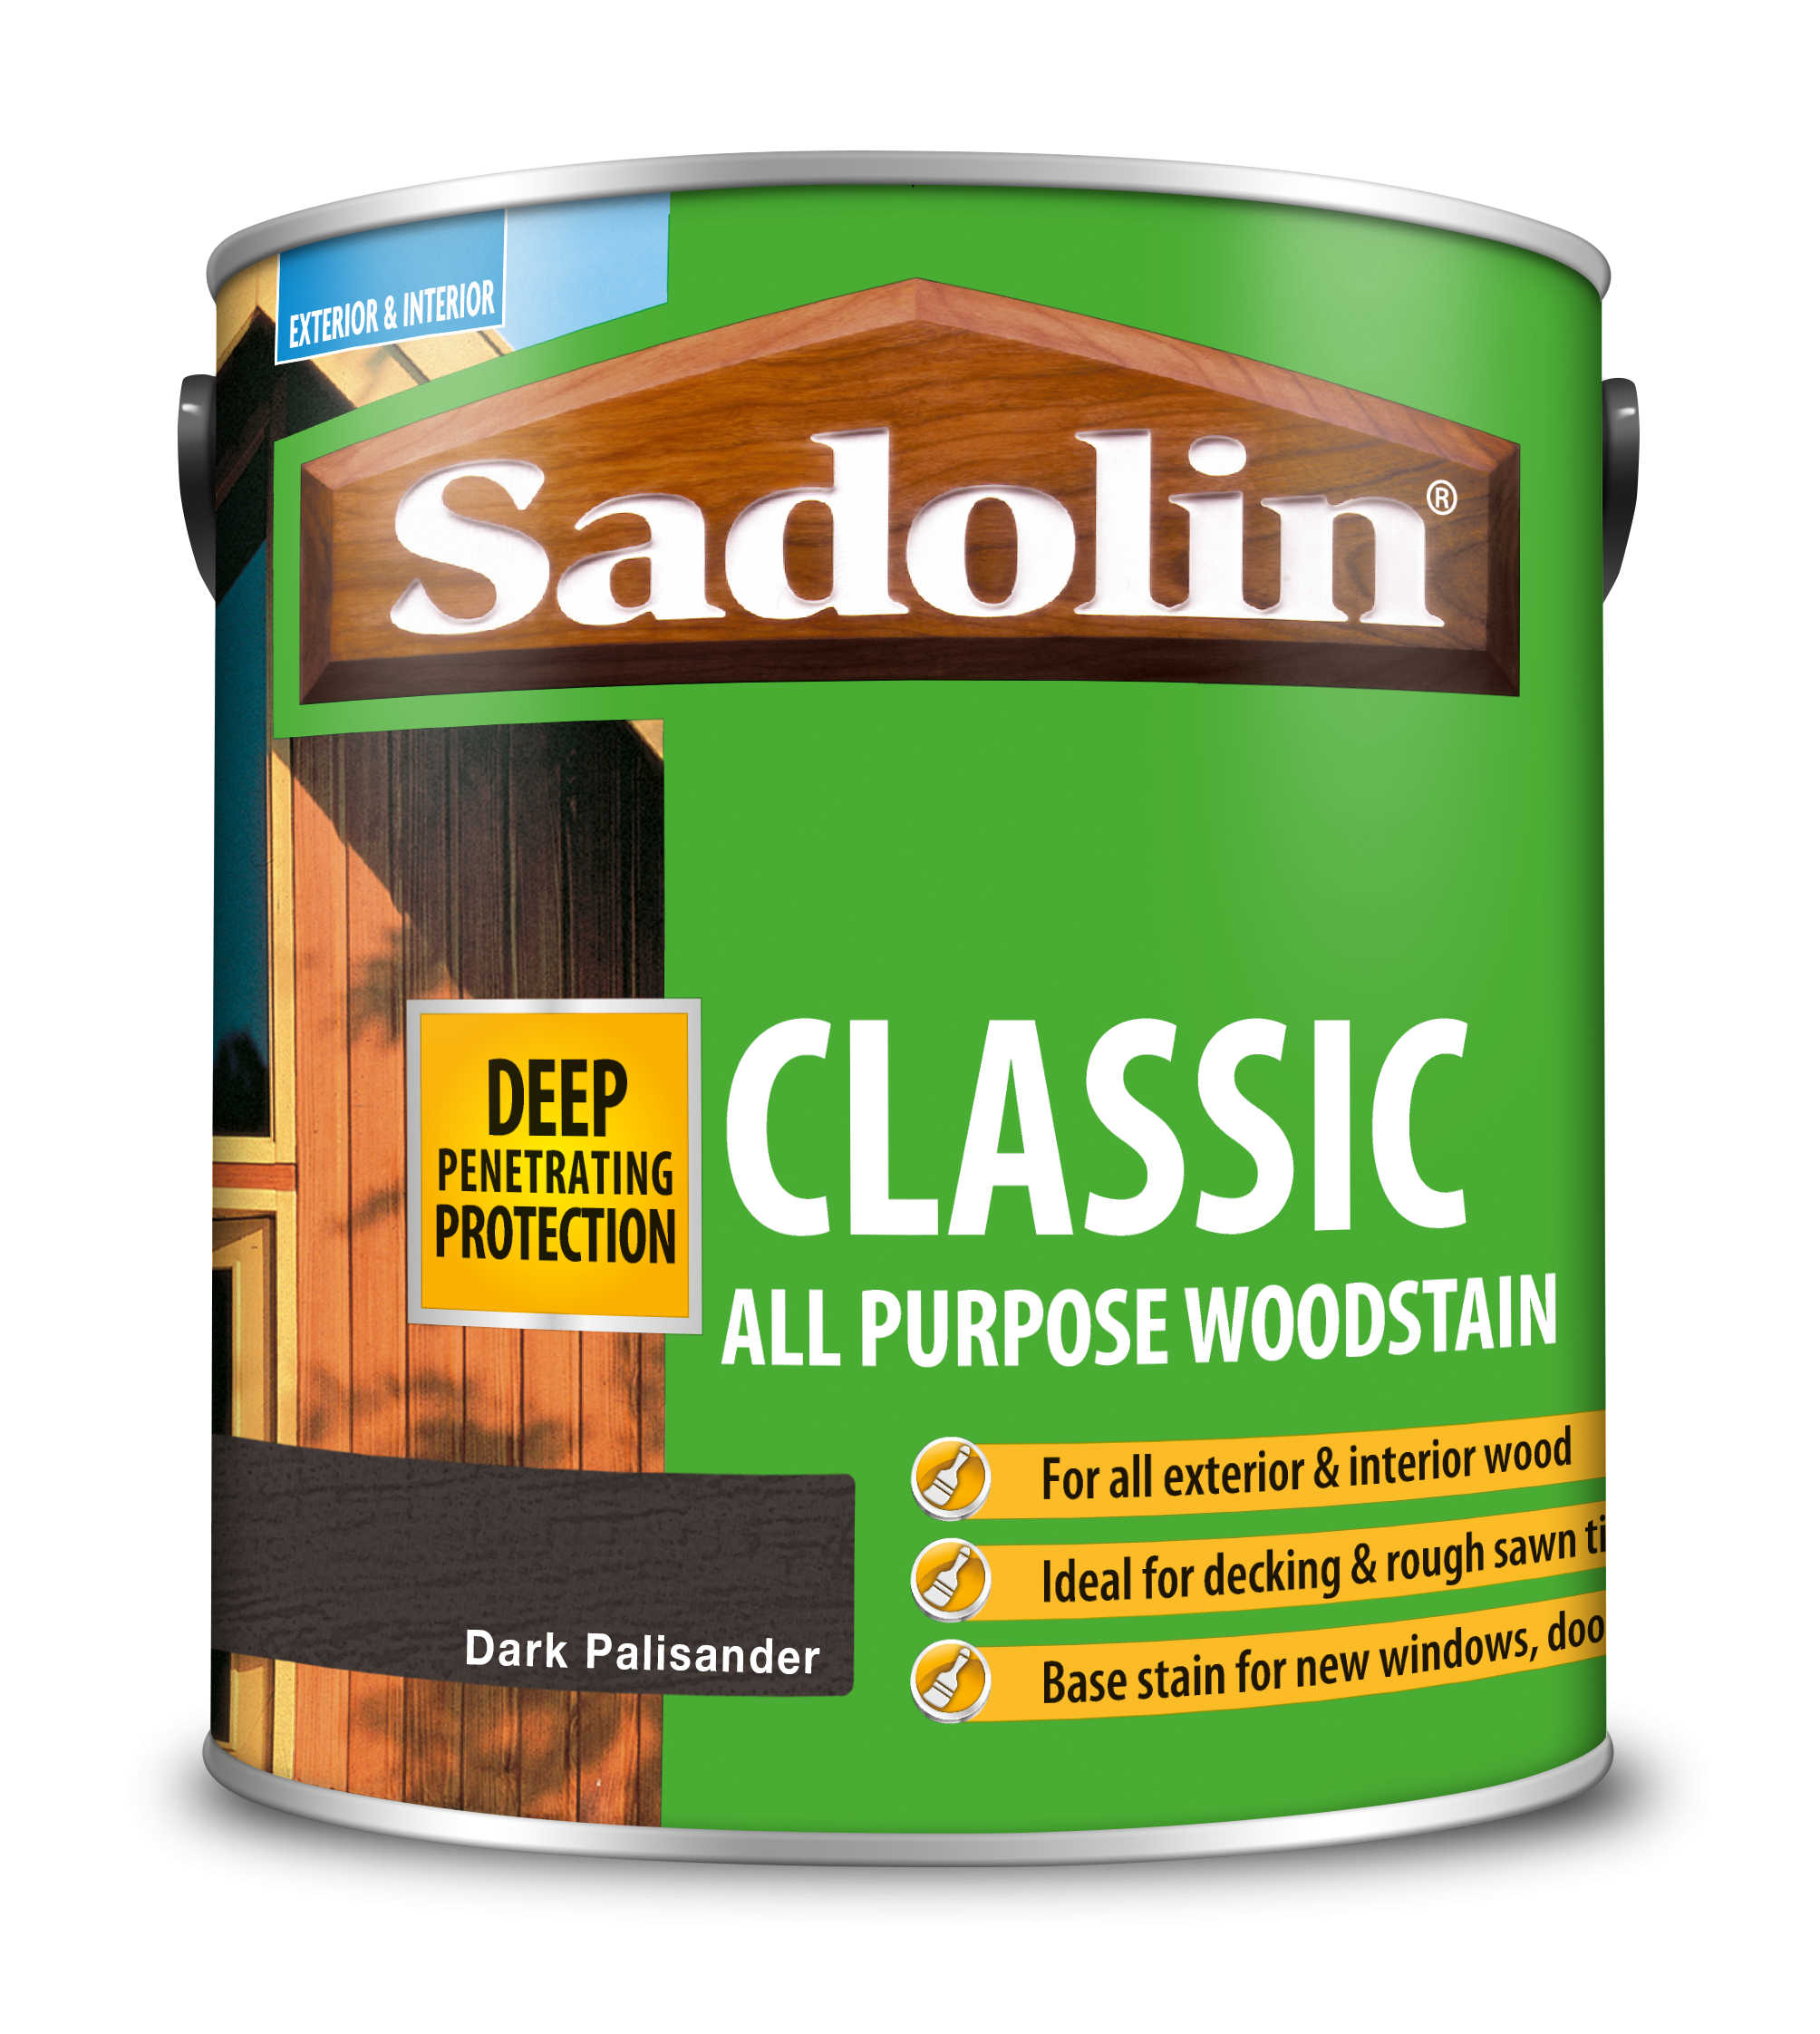 Sadolin Classic All Purpose Woodstain Dark Palisander 2.5L [MPPSPPH]  5028476